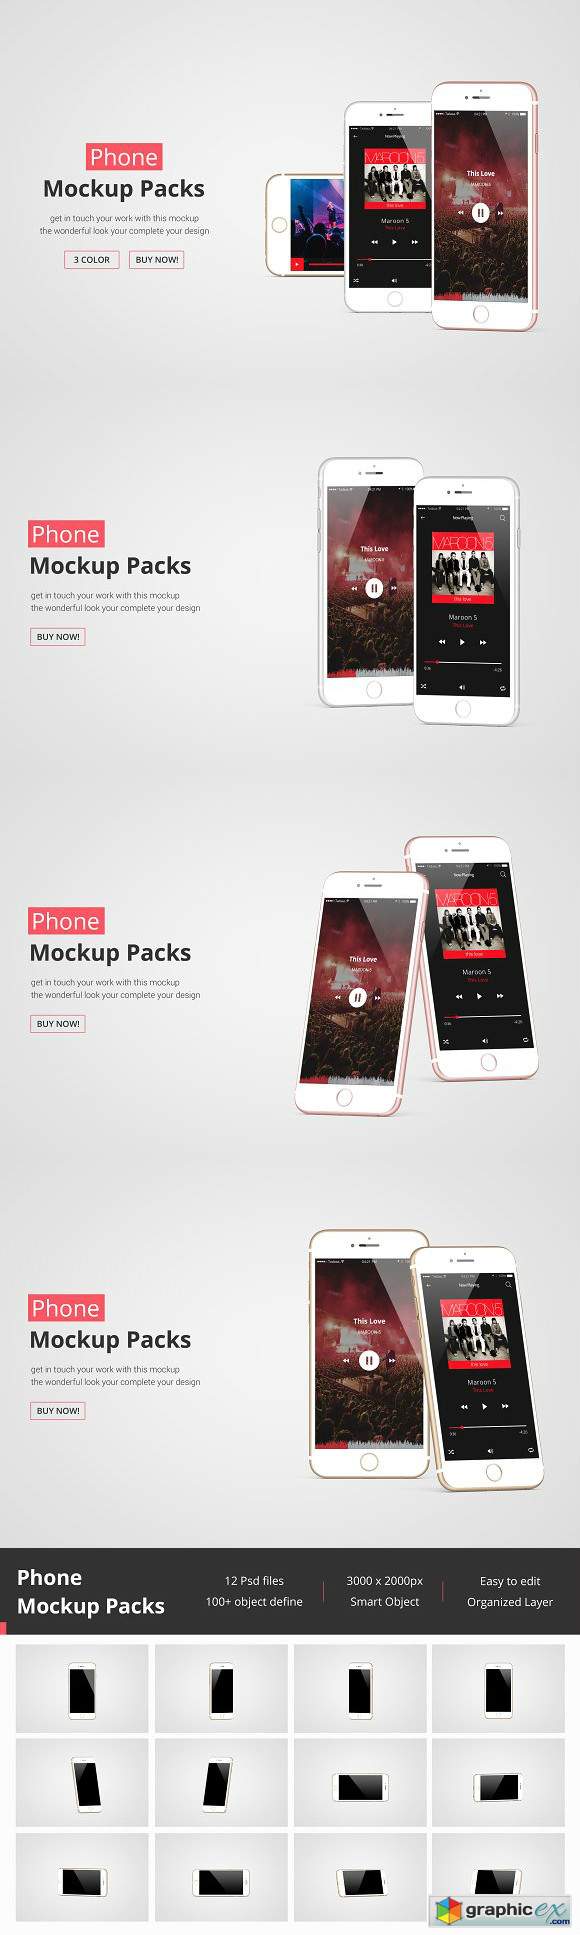 iPhone Mockup Packs